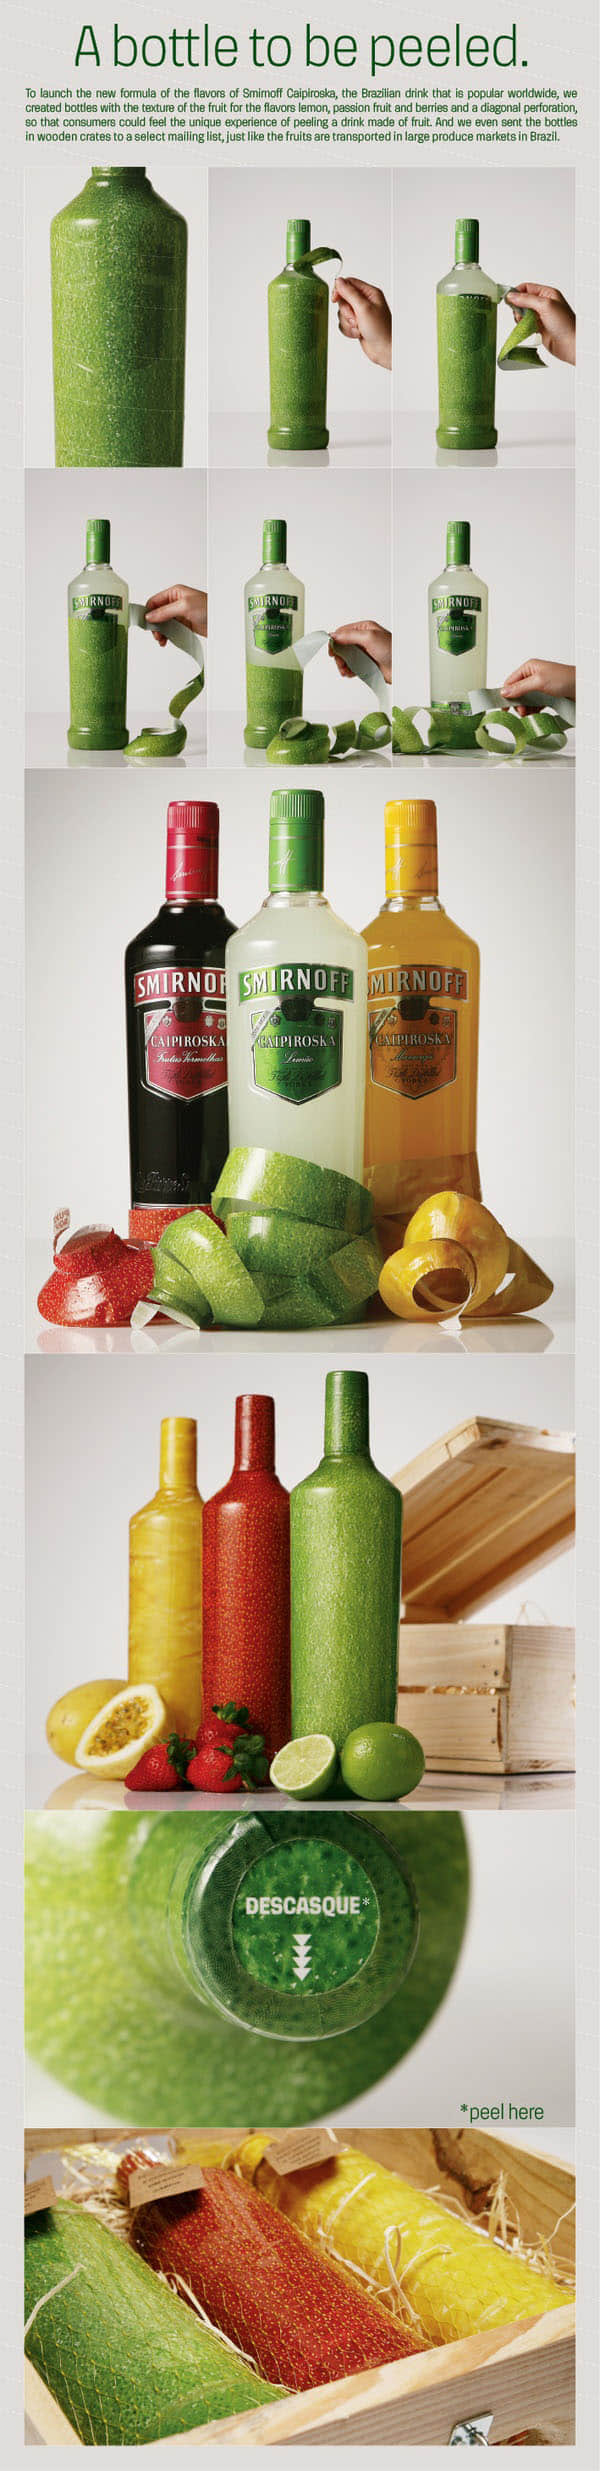 15-bottle-packaging-design